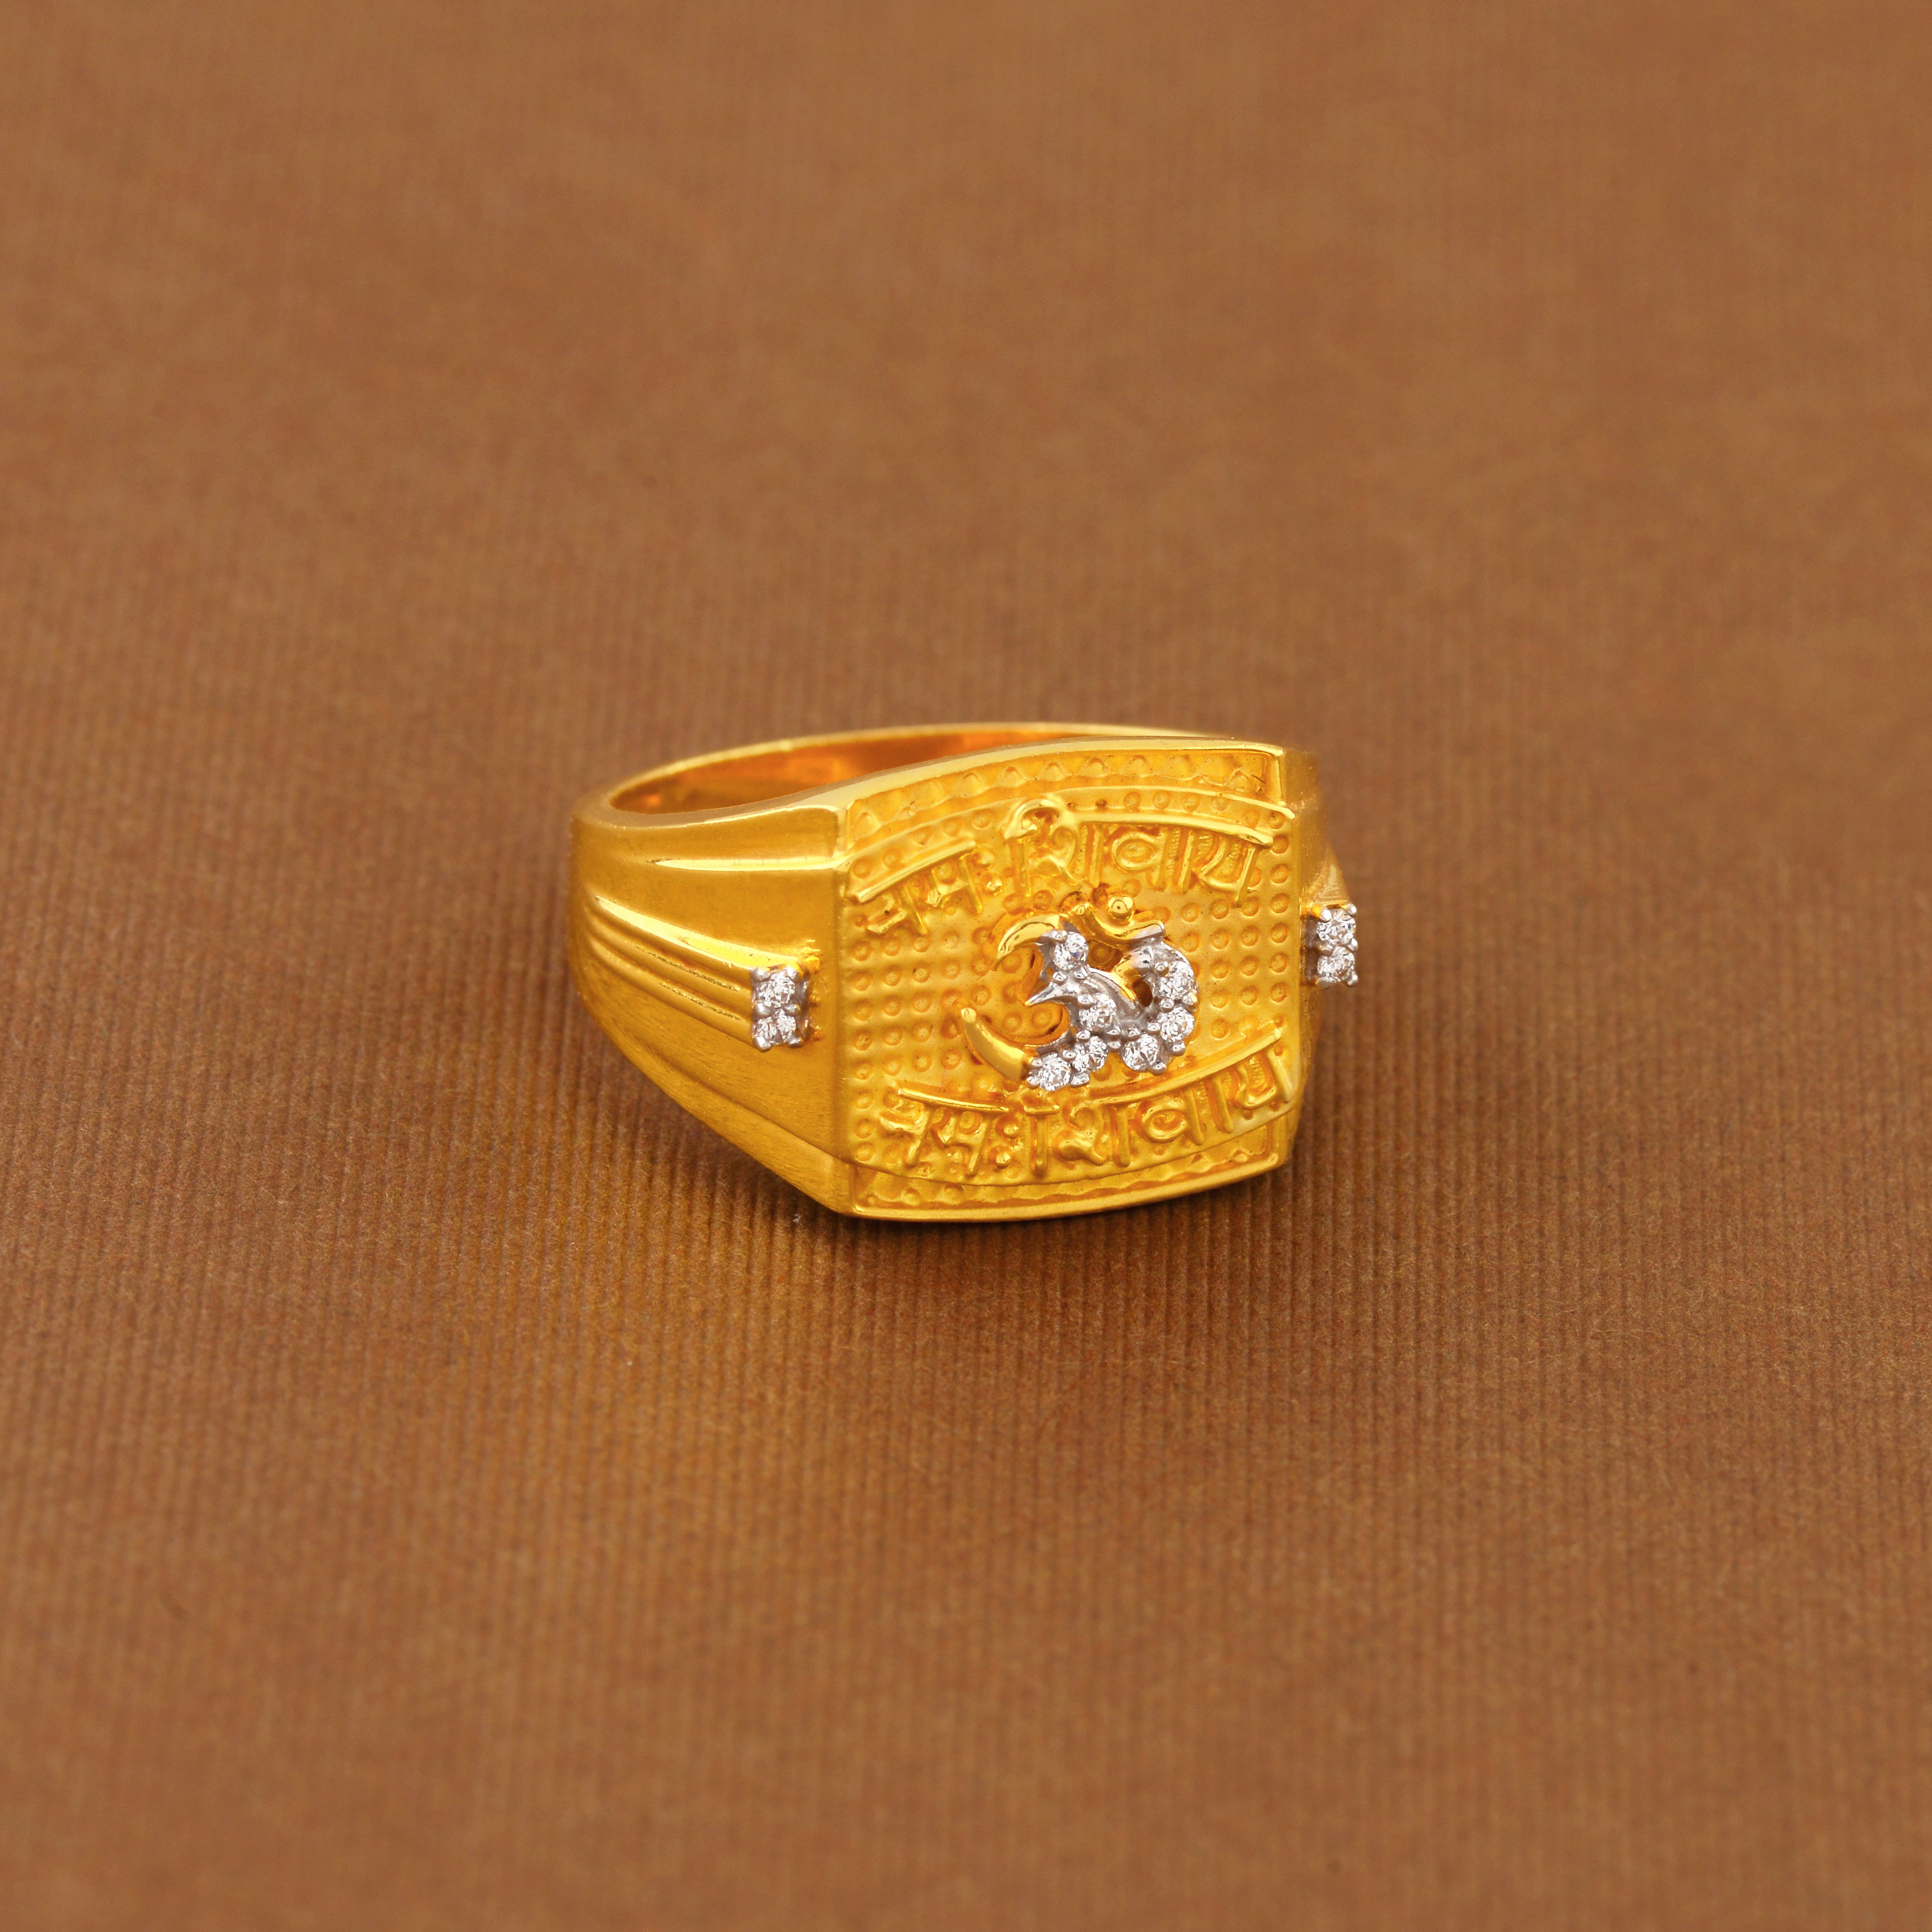 22K Gold Finger Ring in OM Motif